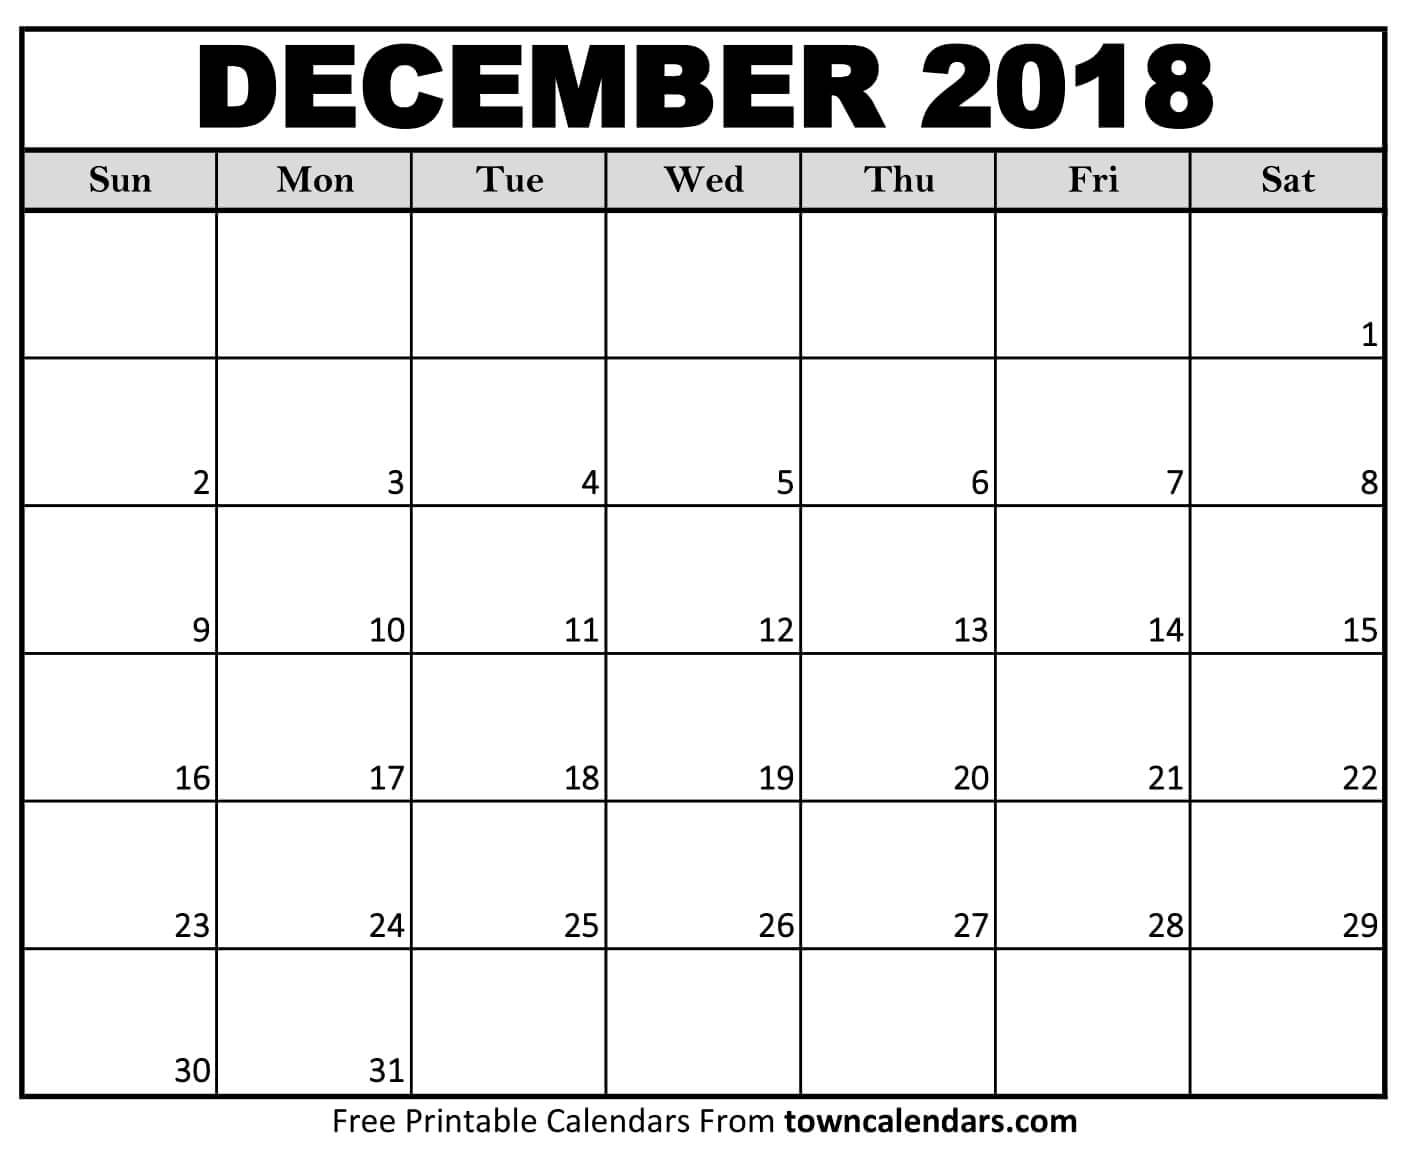 Printable December 2018 Calendar  Towncalendars regarding December Win Calendar